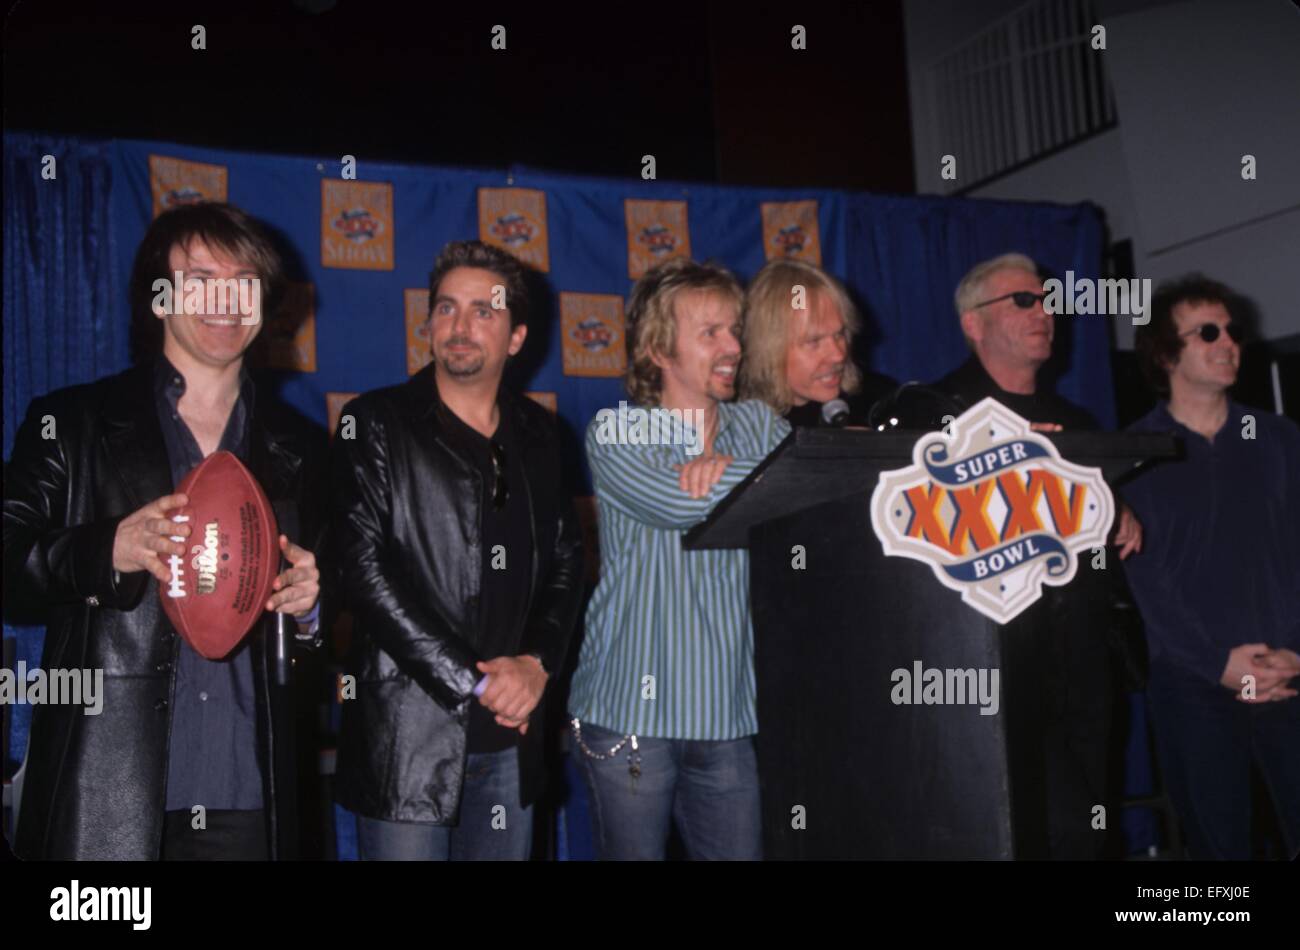 STYX Rock Band at Superbowl XXXV pregame show in Tampa Bay Florida 2001.31420jbb. © John Barrett/Globe Photos/ZUMA Wire/Alamy Live News Stock Photo